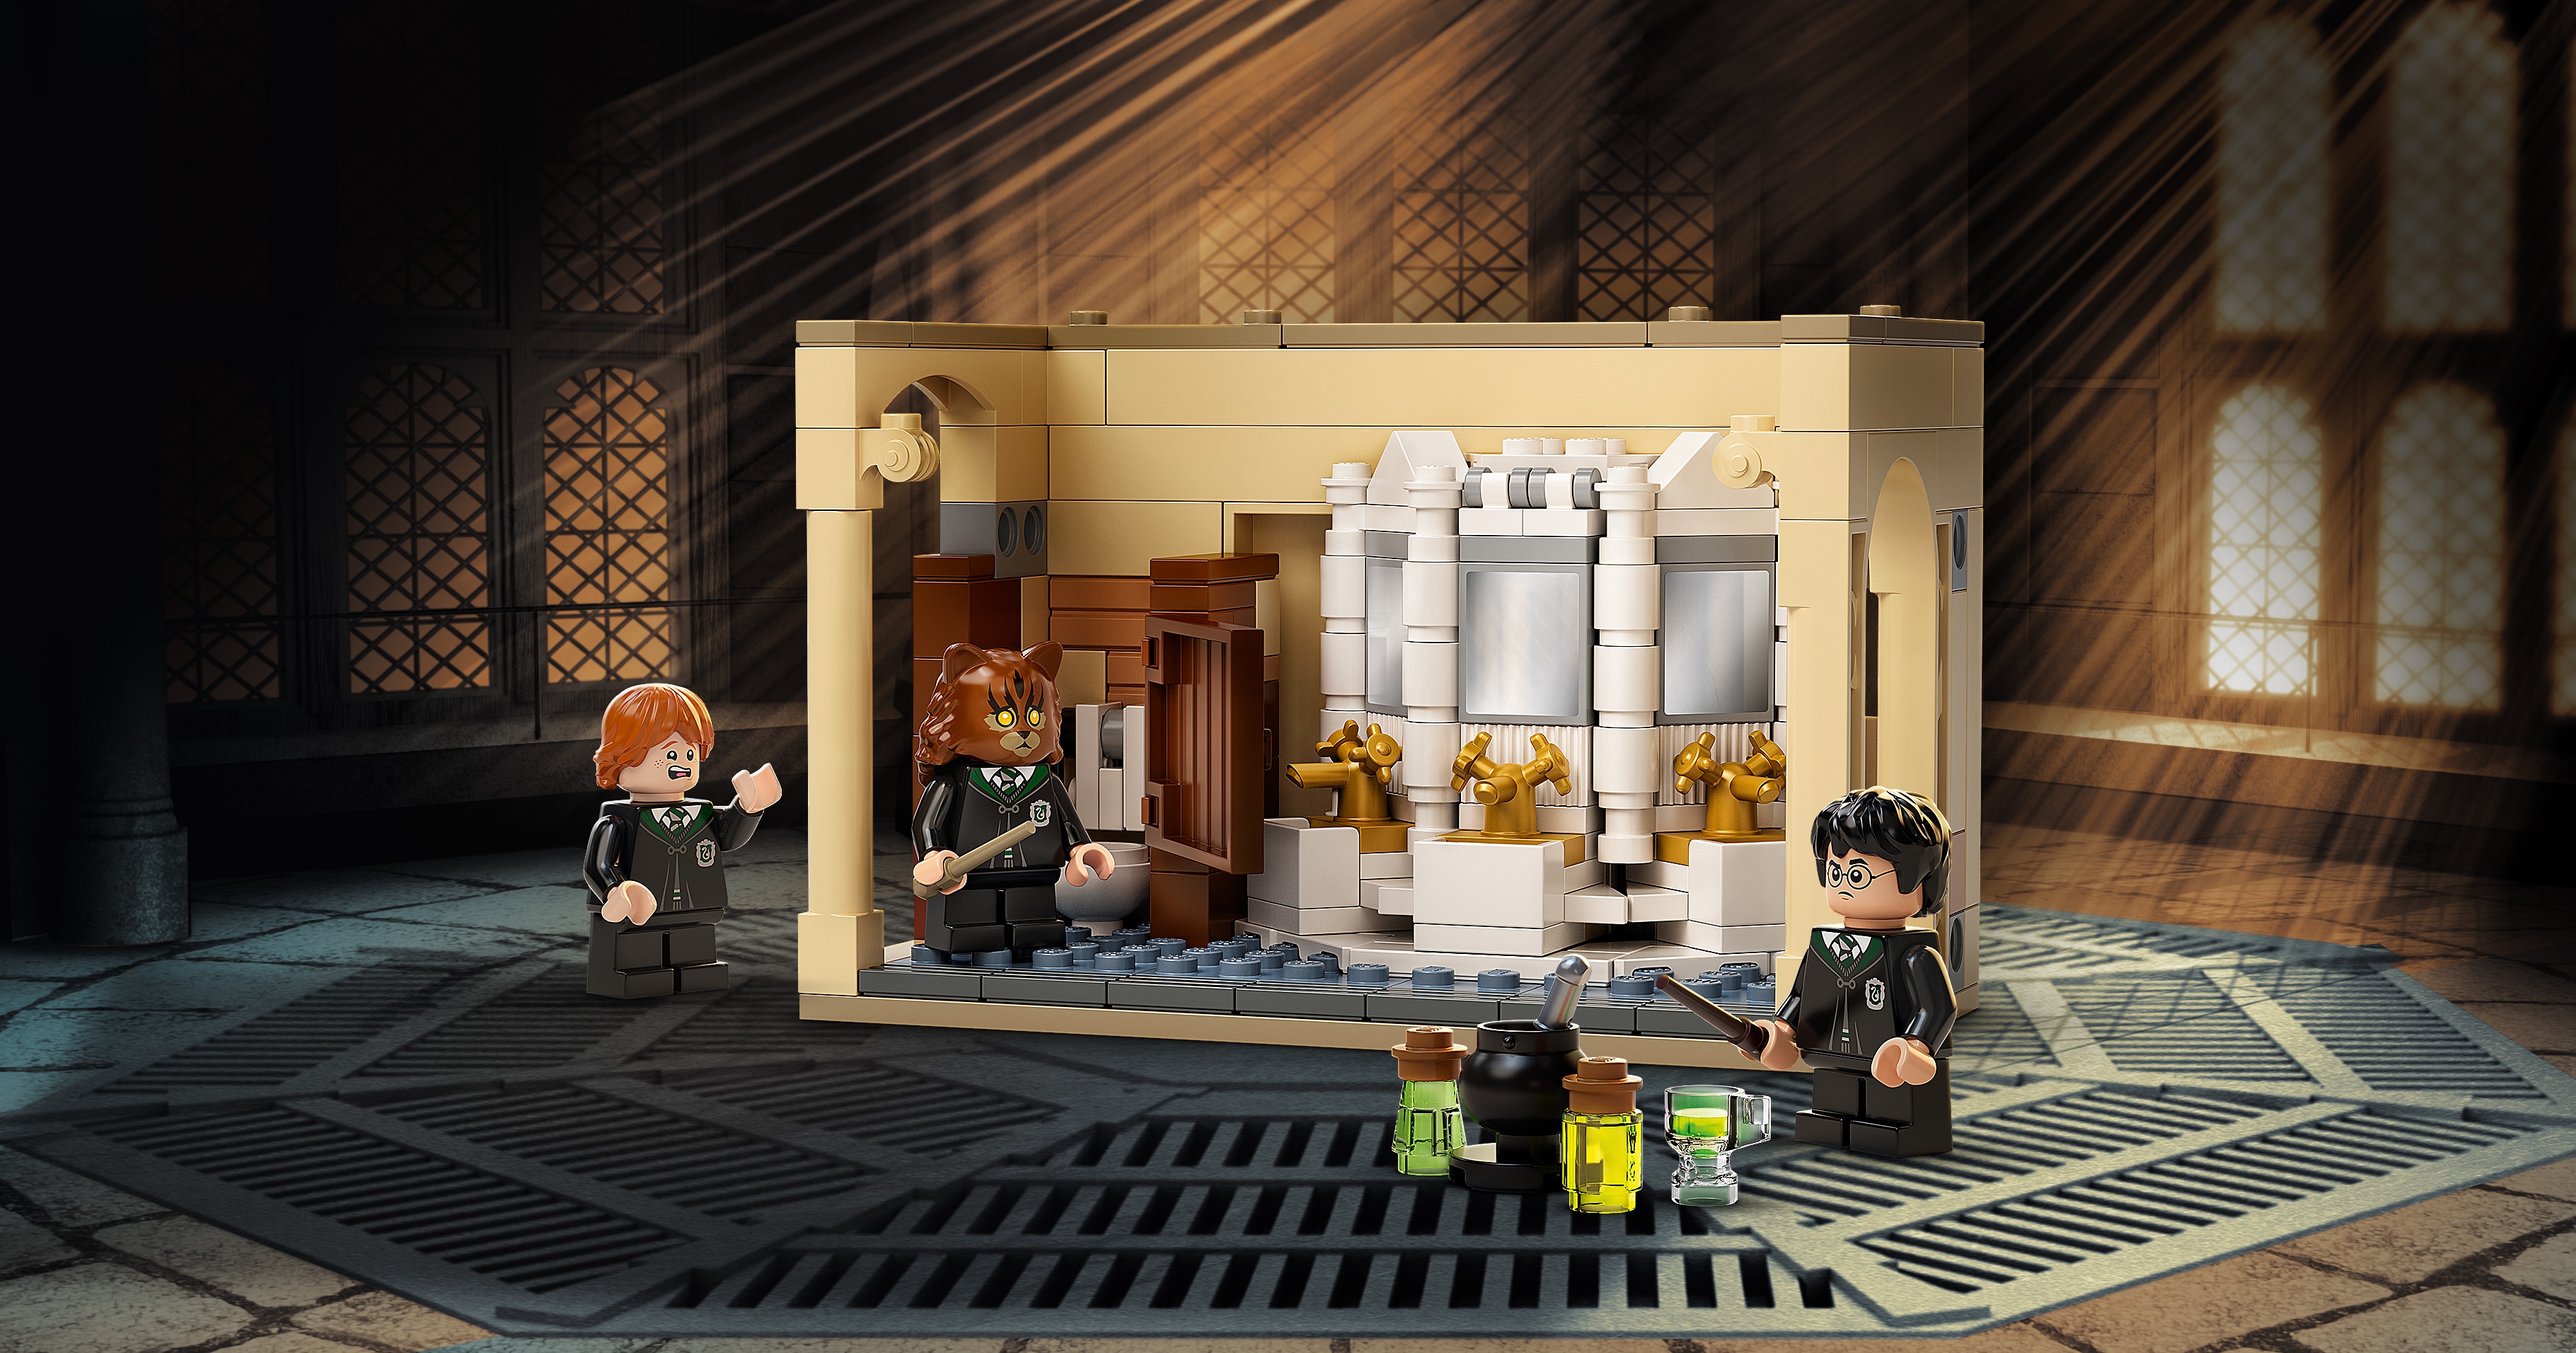 LEGO 76386 Hogwarts: Polyjuice Potion Mistake Instructions, Harry Potter